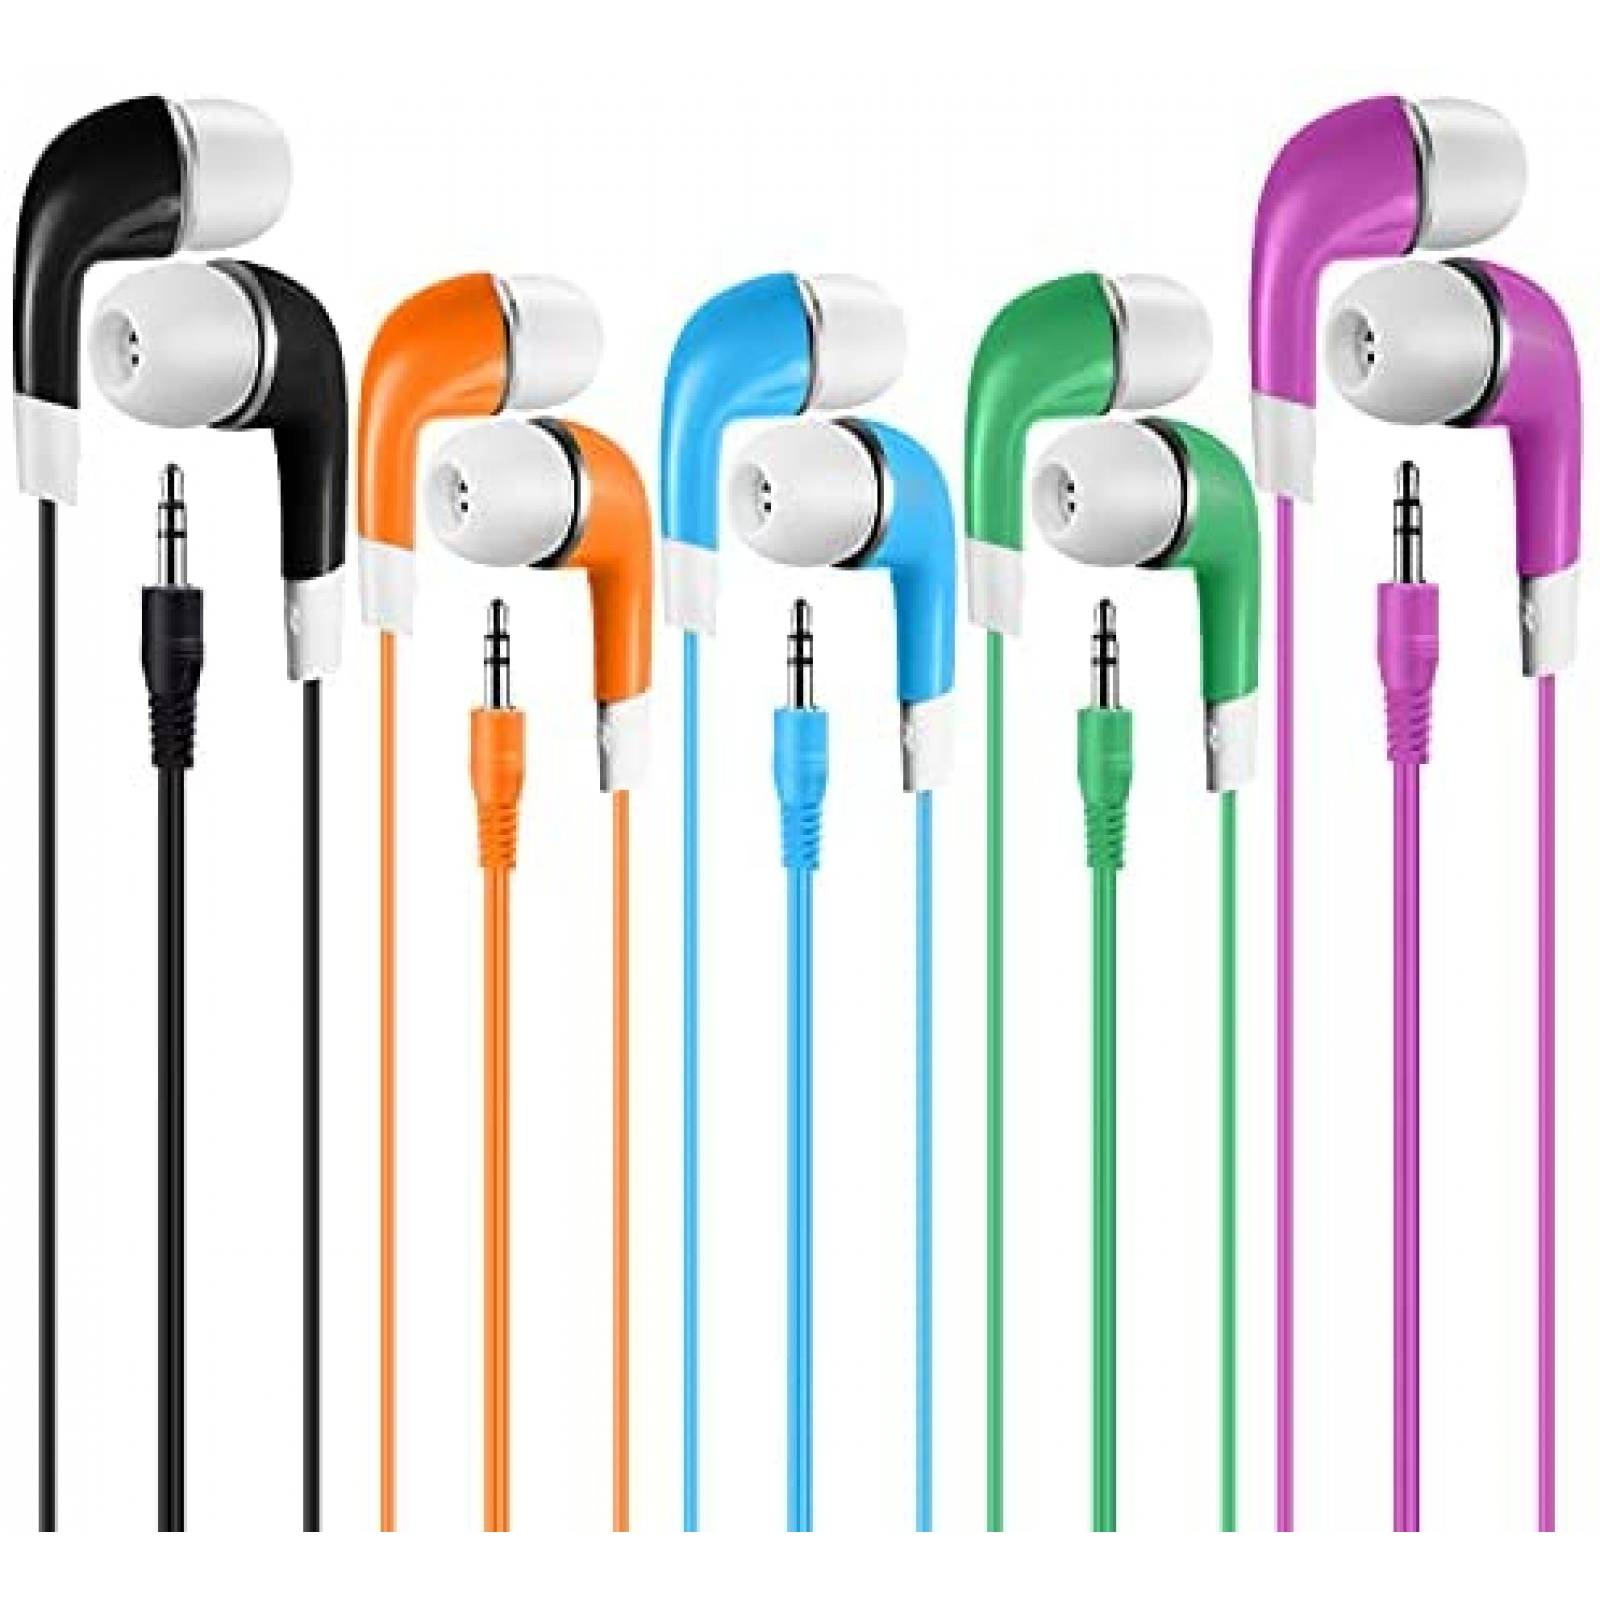 Audífonos alámbricos de colores